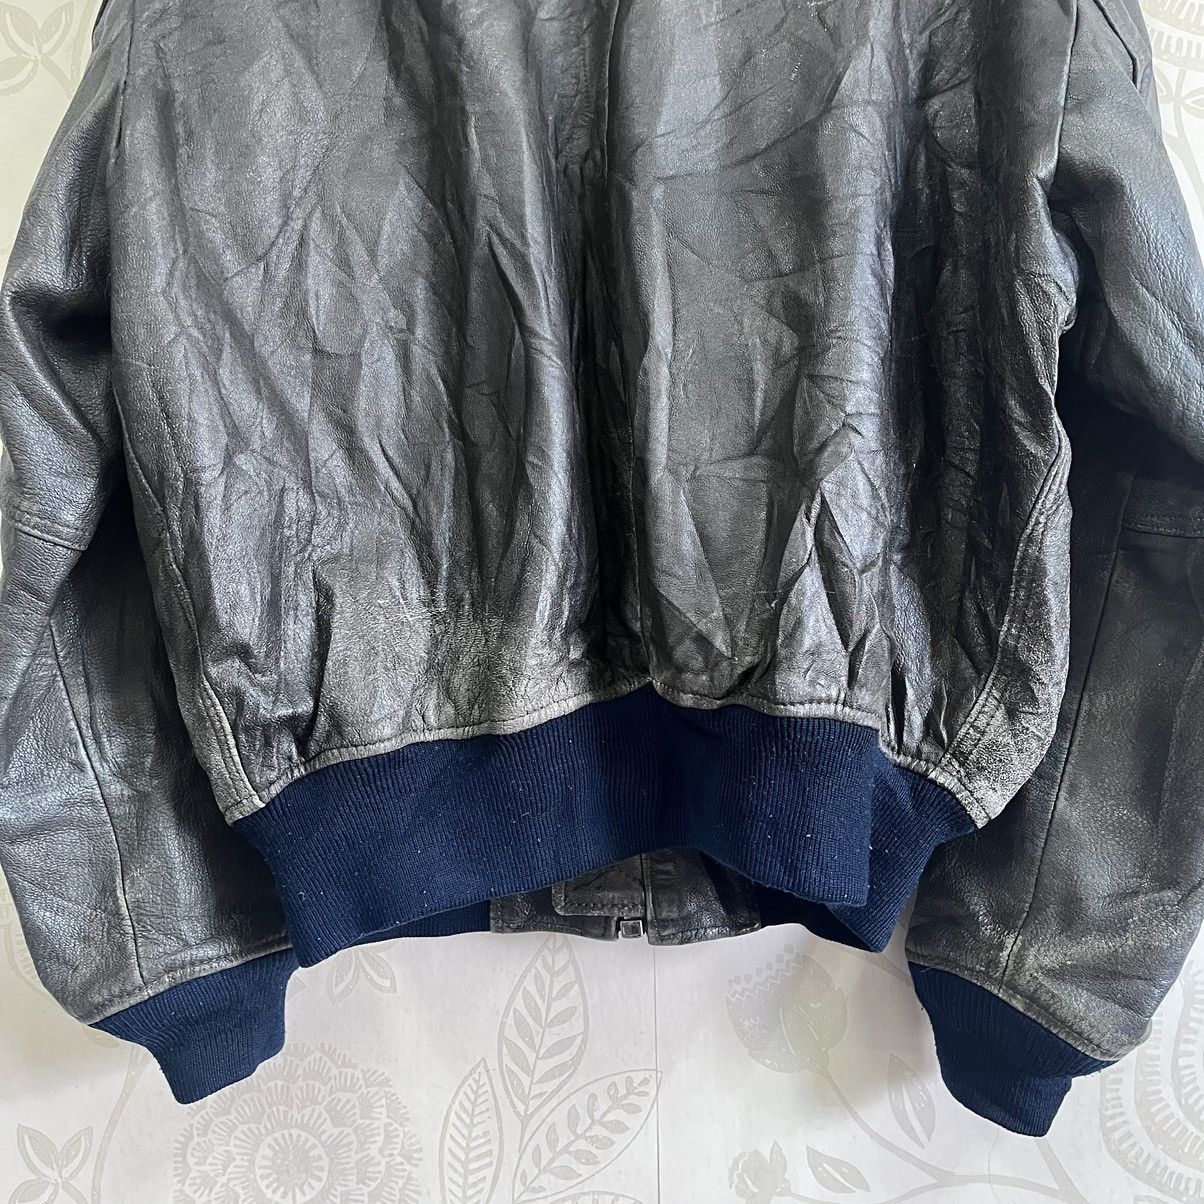 Vintage Avirex Officer's Goat Skin Leather Bomber Jacket - 13